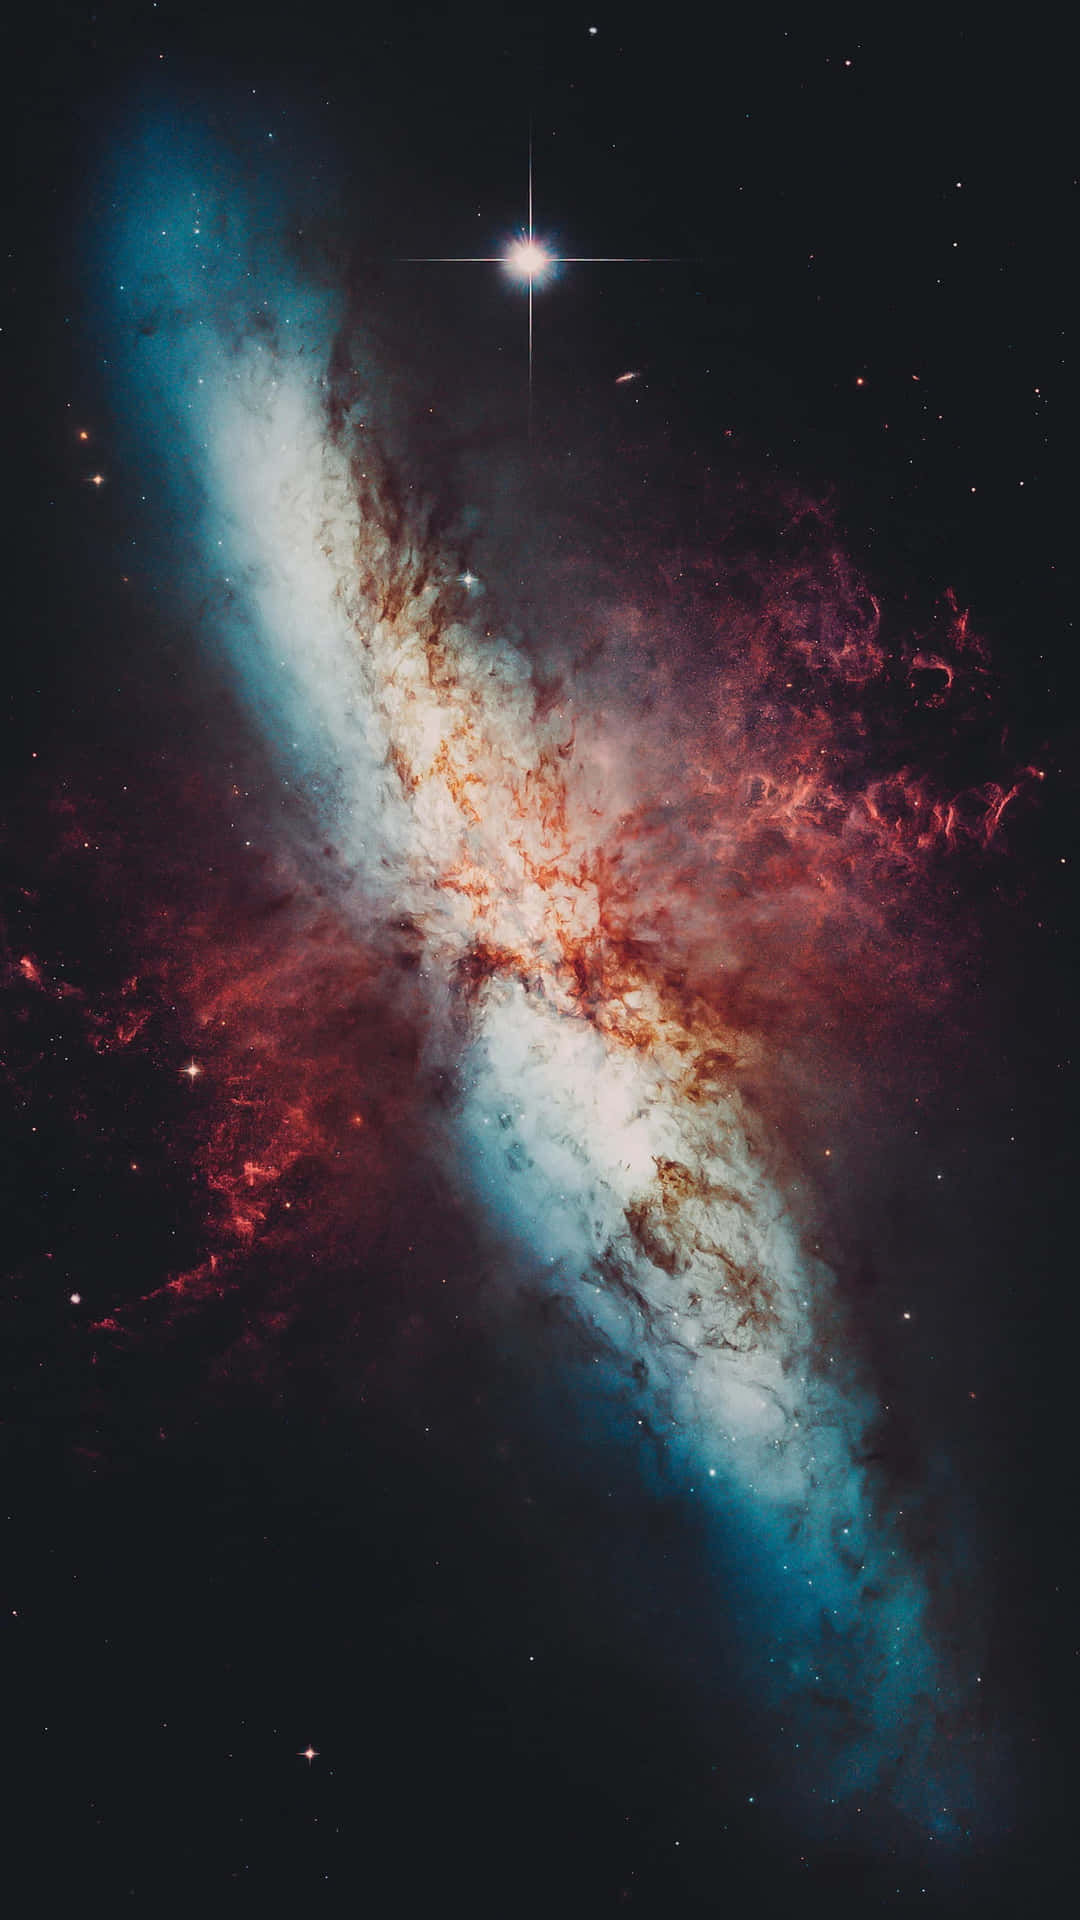 Supernova Explosion in Deep Space Wallpaper